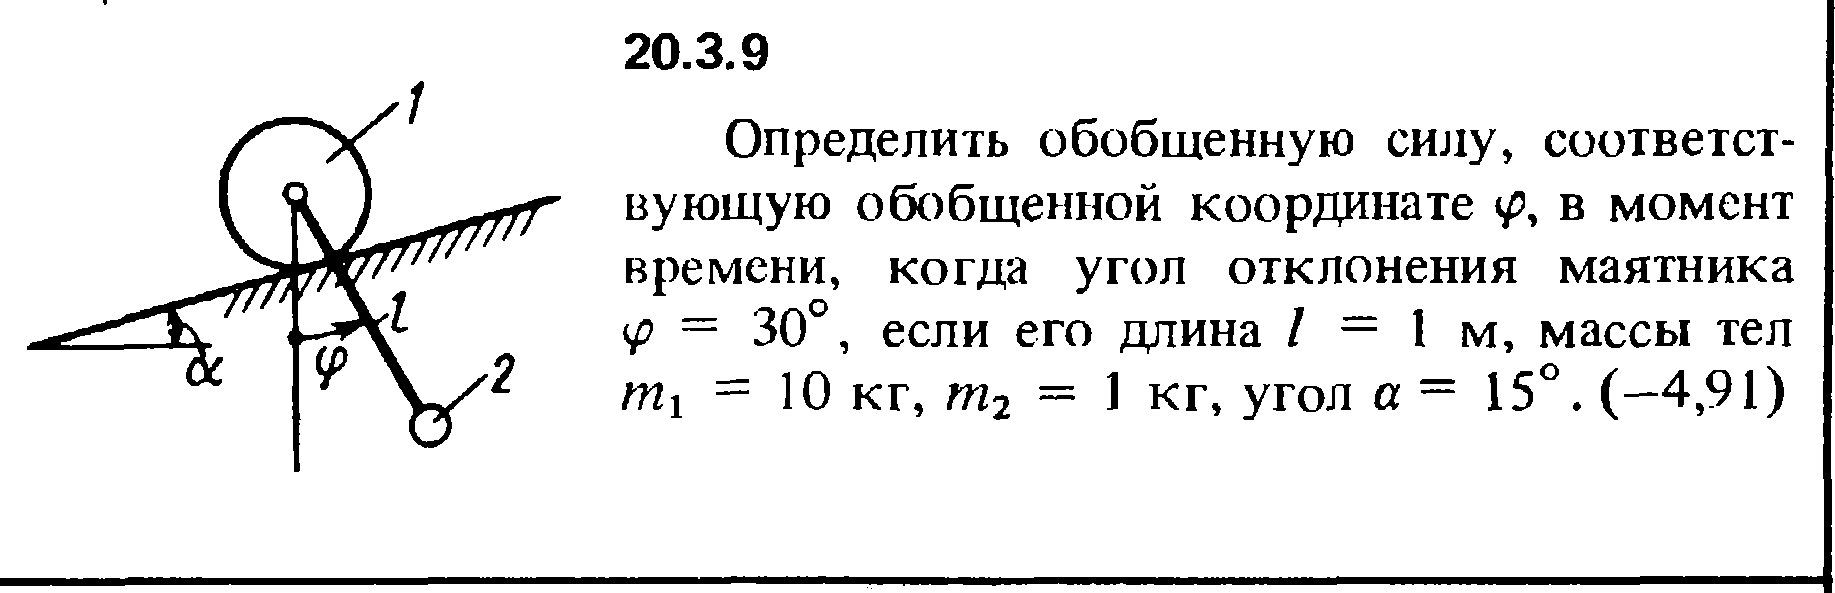 Решение 20.3.9 из сборника (решебника) Кепе О.Е. 1989